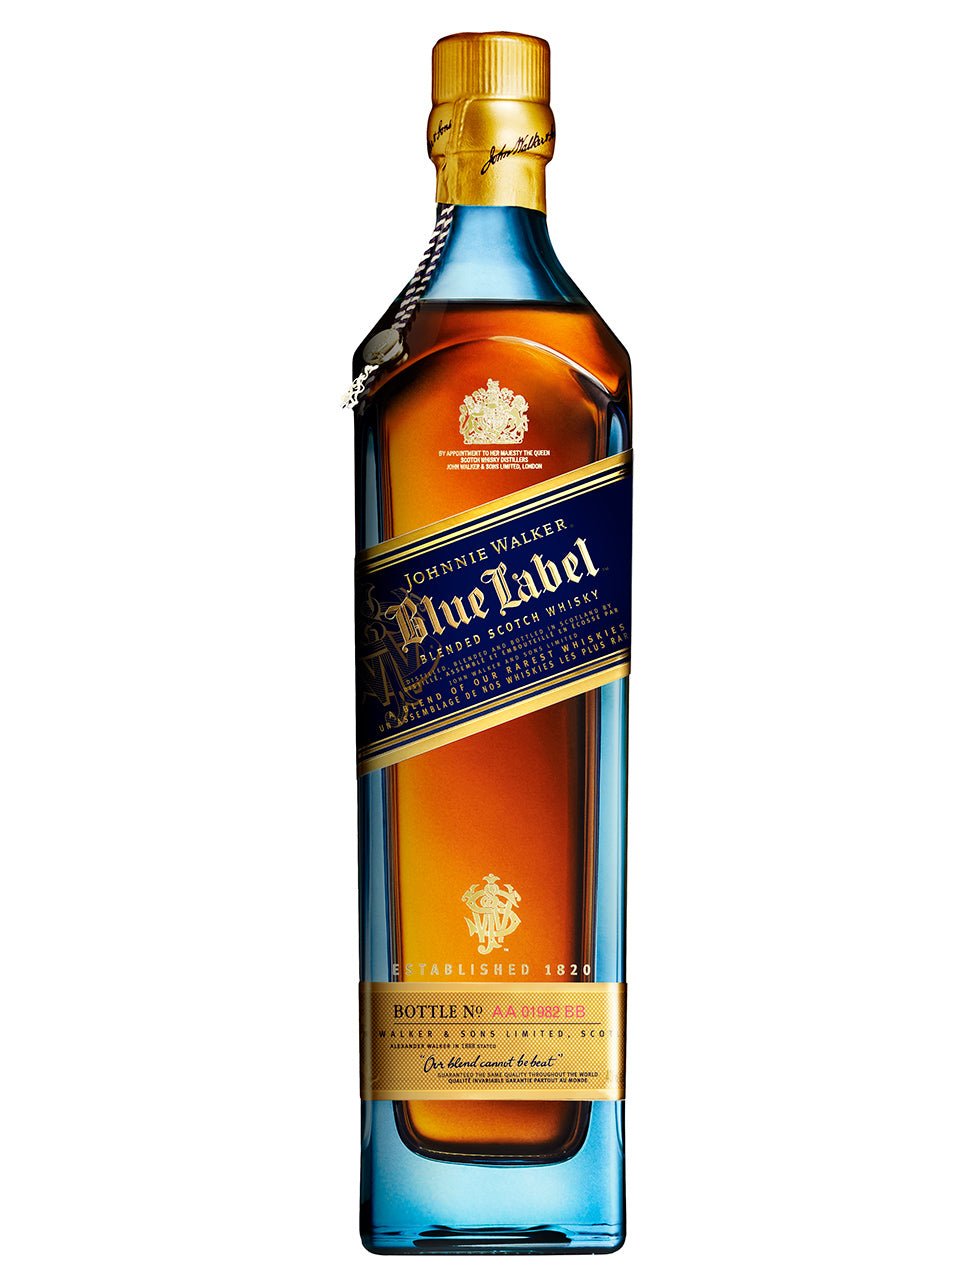 Discover Johnnie Walker Blue Label, Blended Scotch Whisky